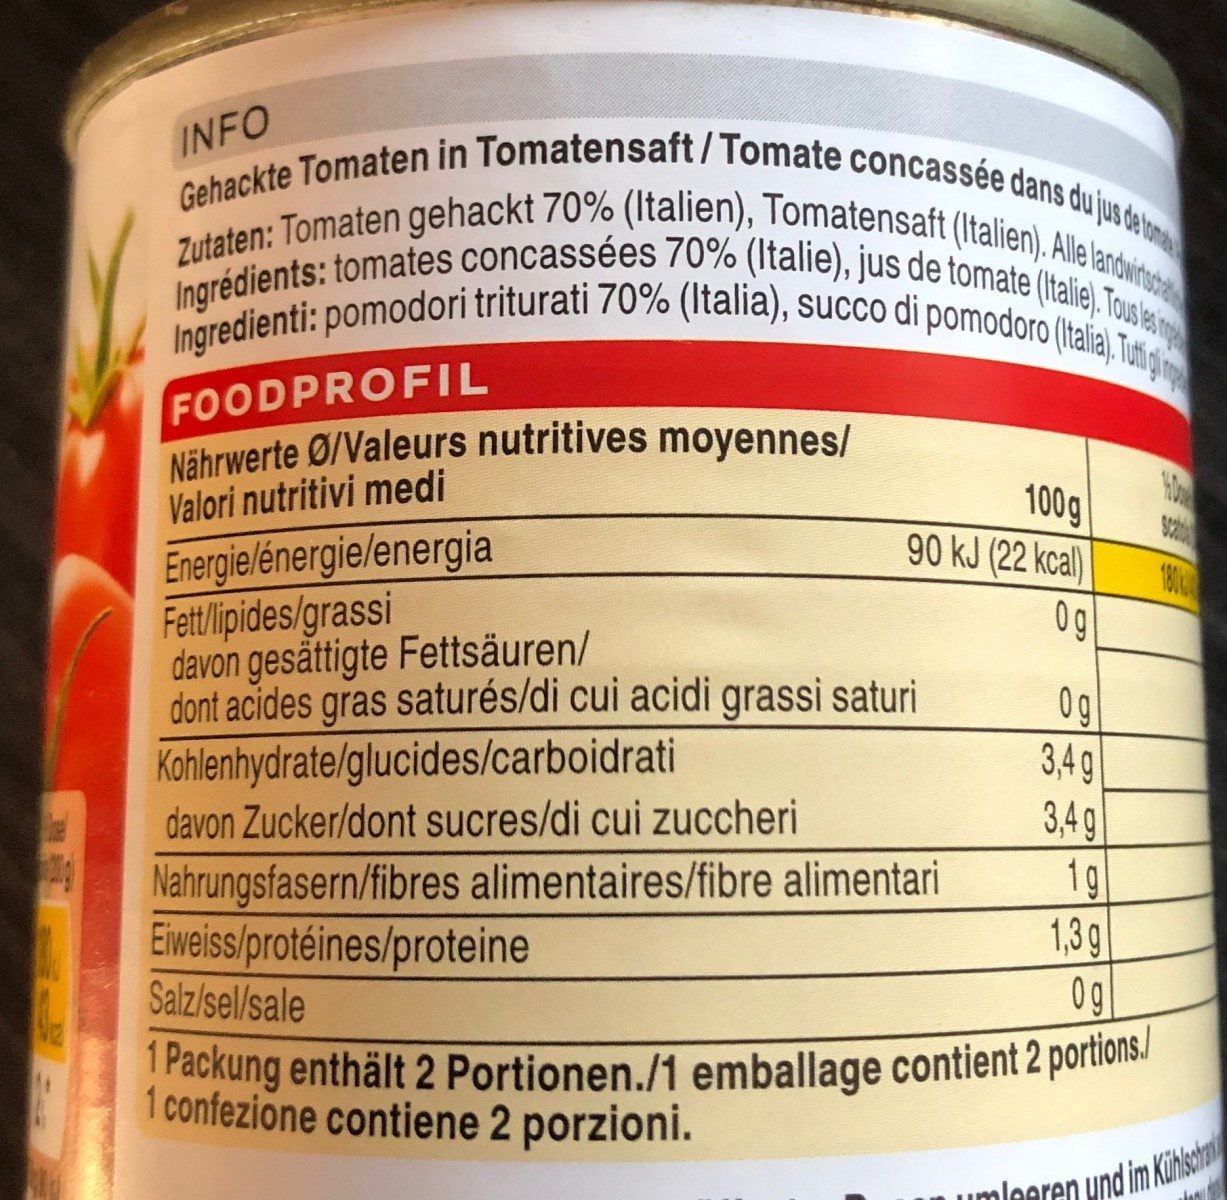 Pomodori Triturati (gehackte Tomaten) - Tableau nutritionnel